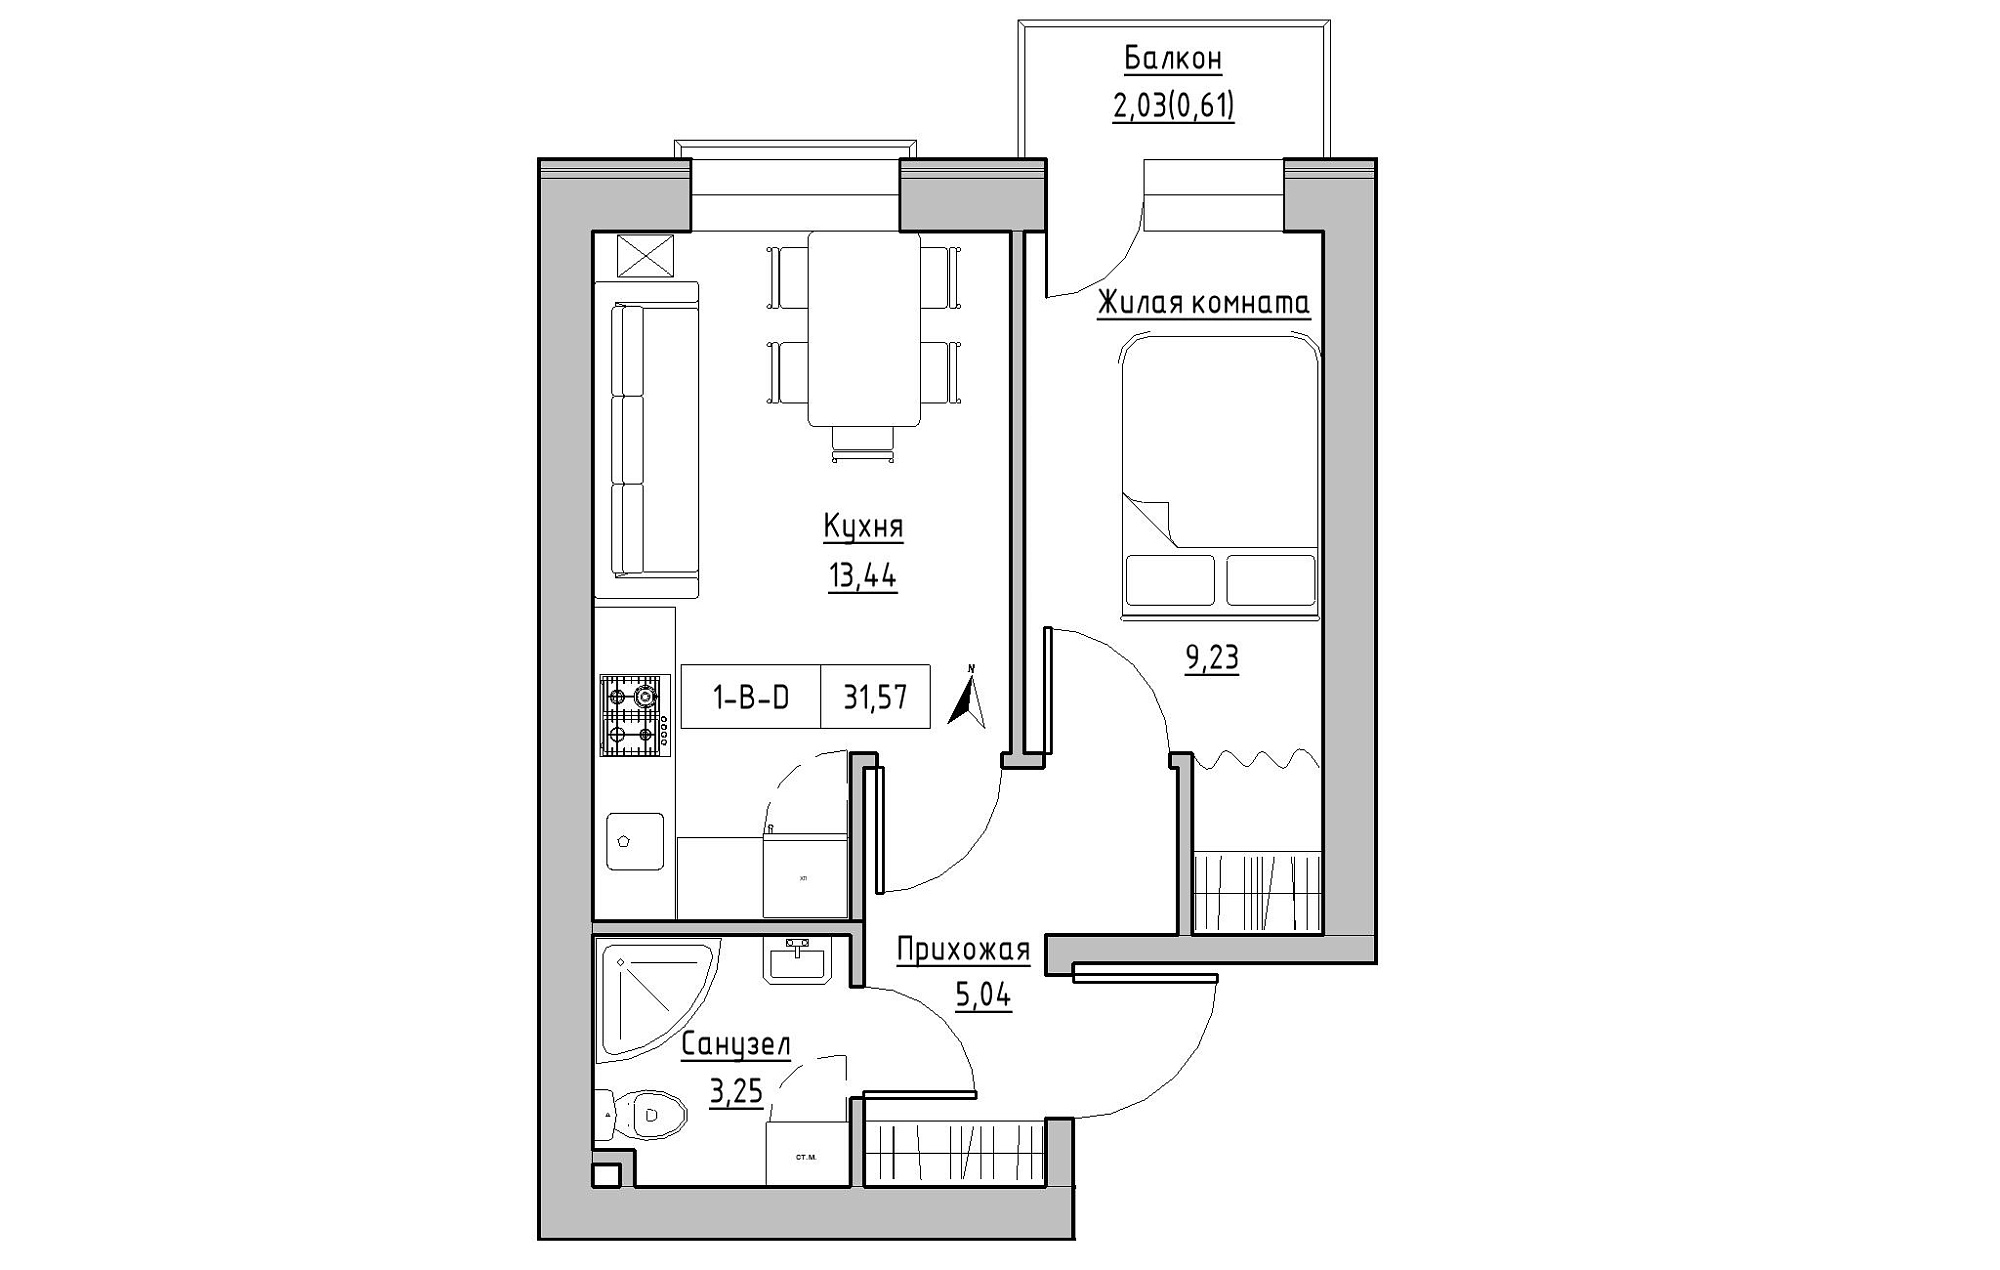 Planning 1-rm flats area 31.57m2, KS-019-03/0013.